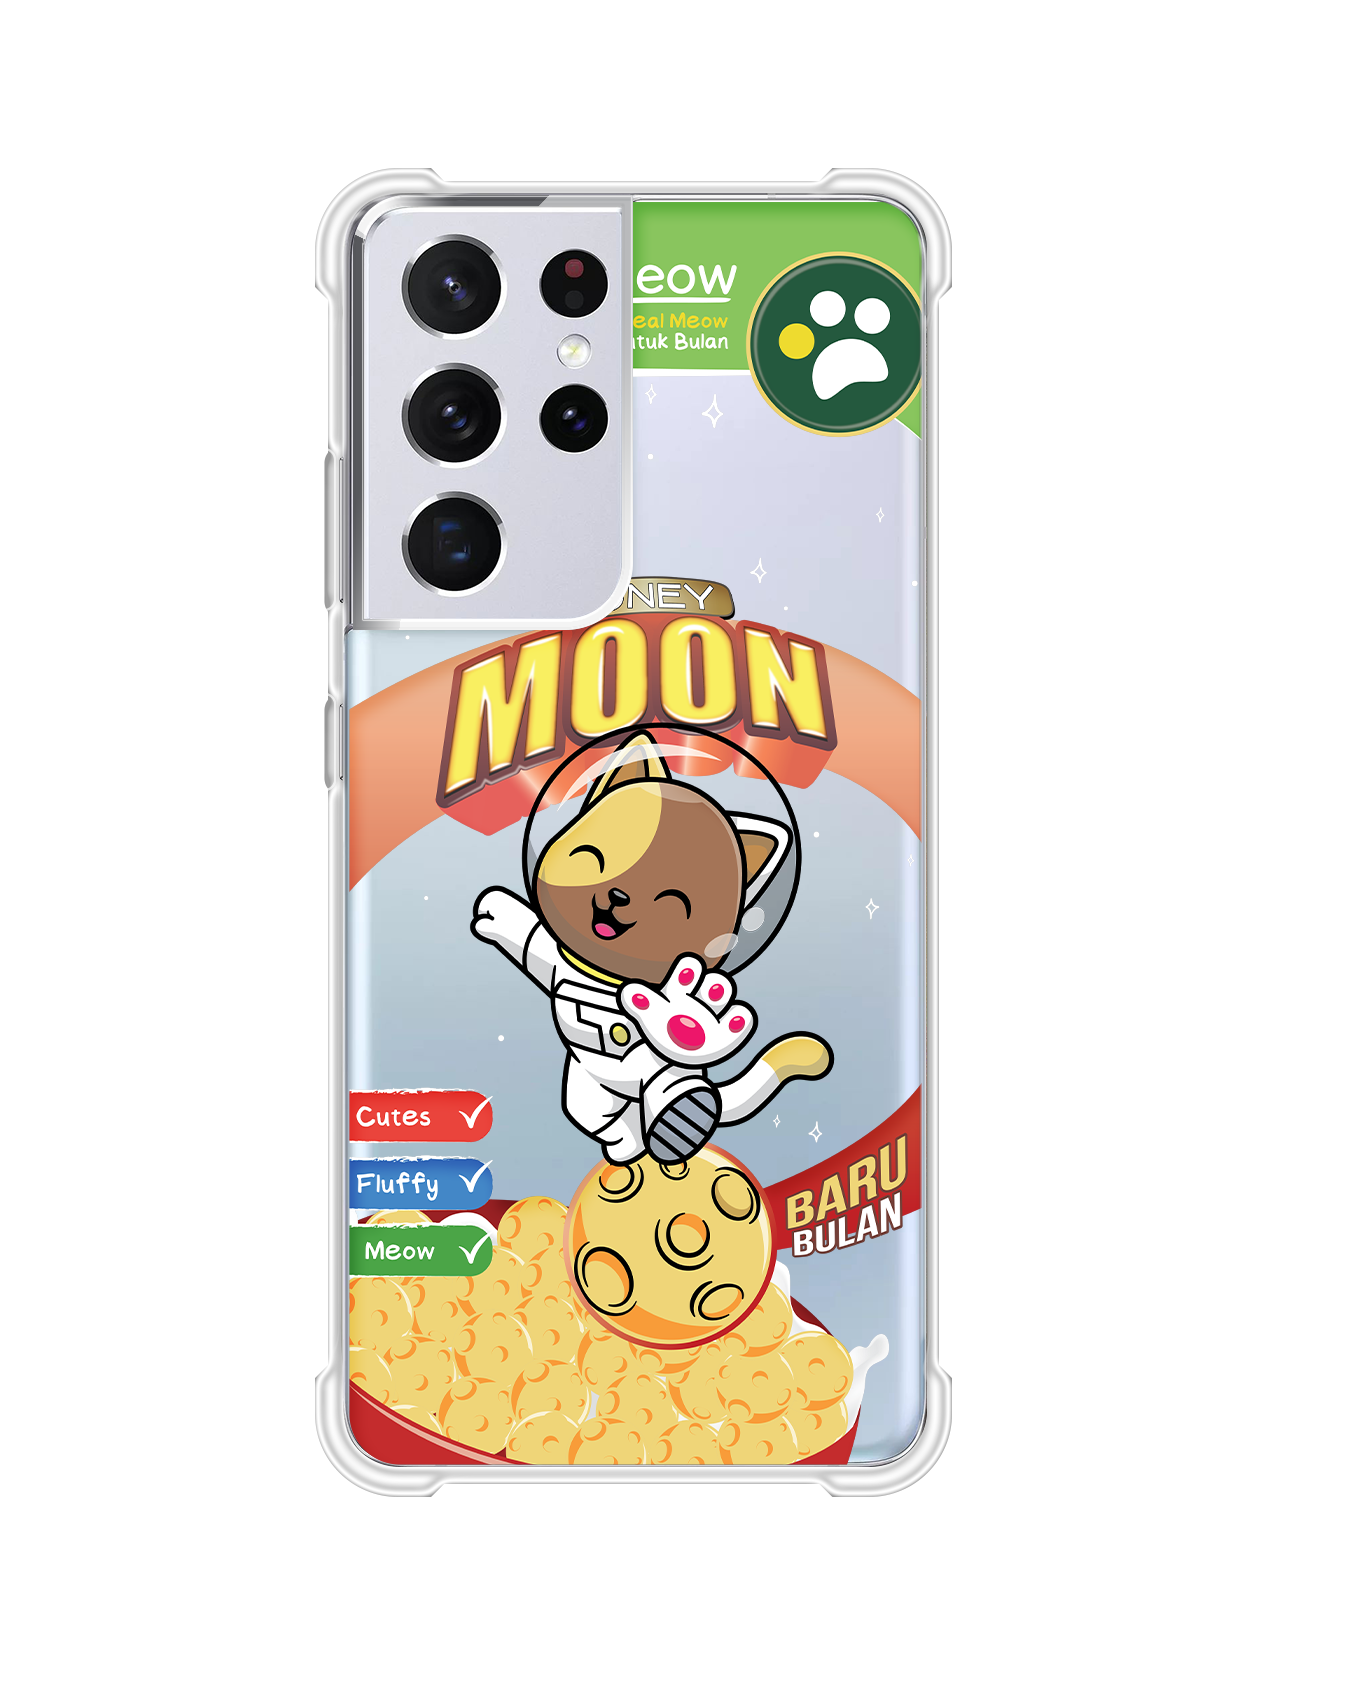 Android  - Honey Moon